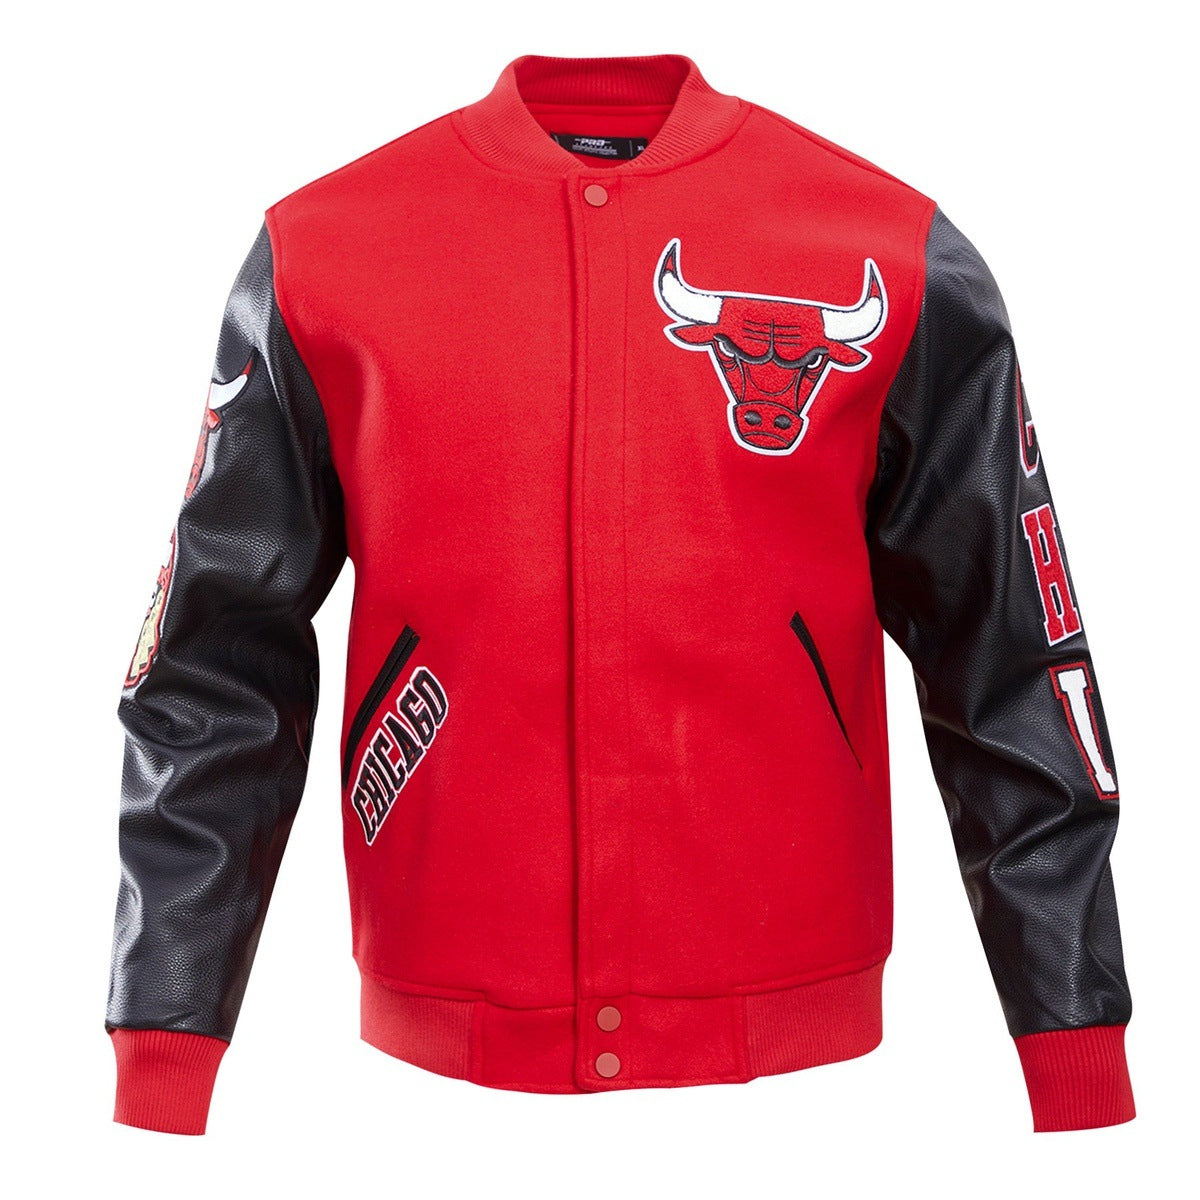 Men’s Pro Standard Chicago Bulls Satin Jacket Black - M / BLACK